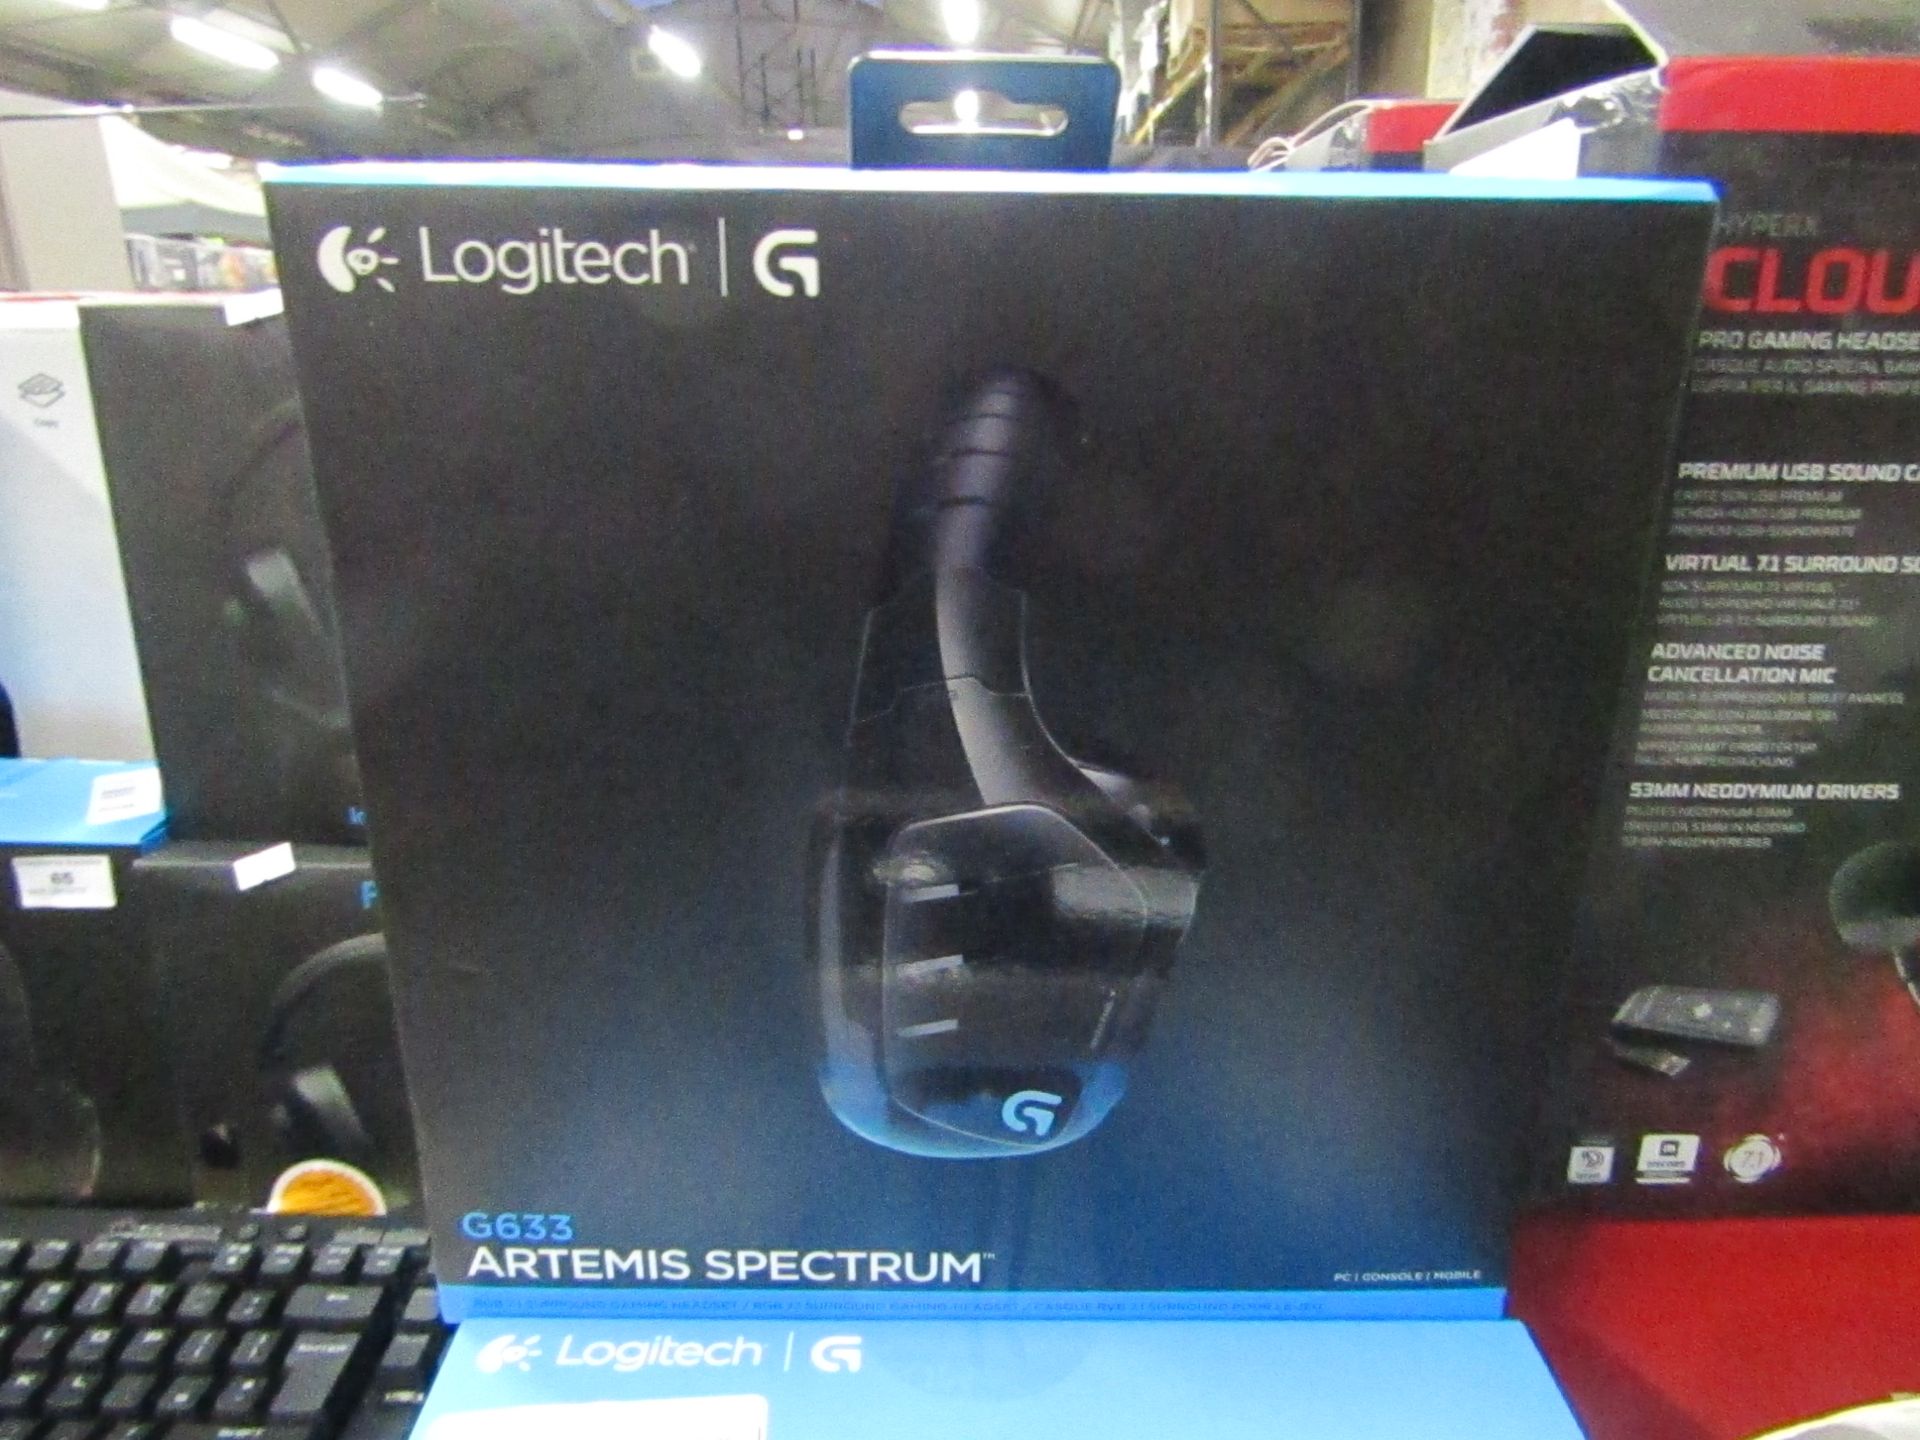 Logitech G633 Artemis Spectrum headphones, untested and boxed.